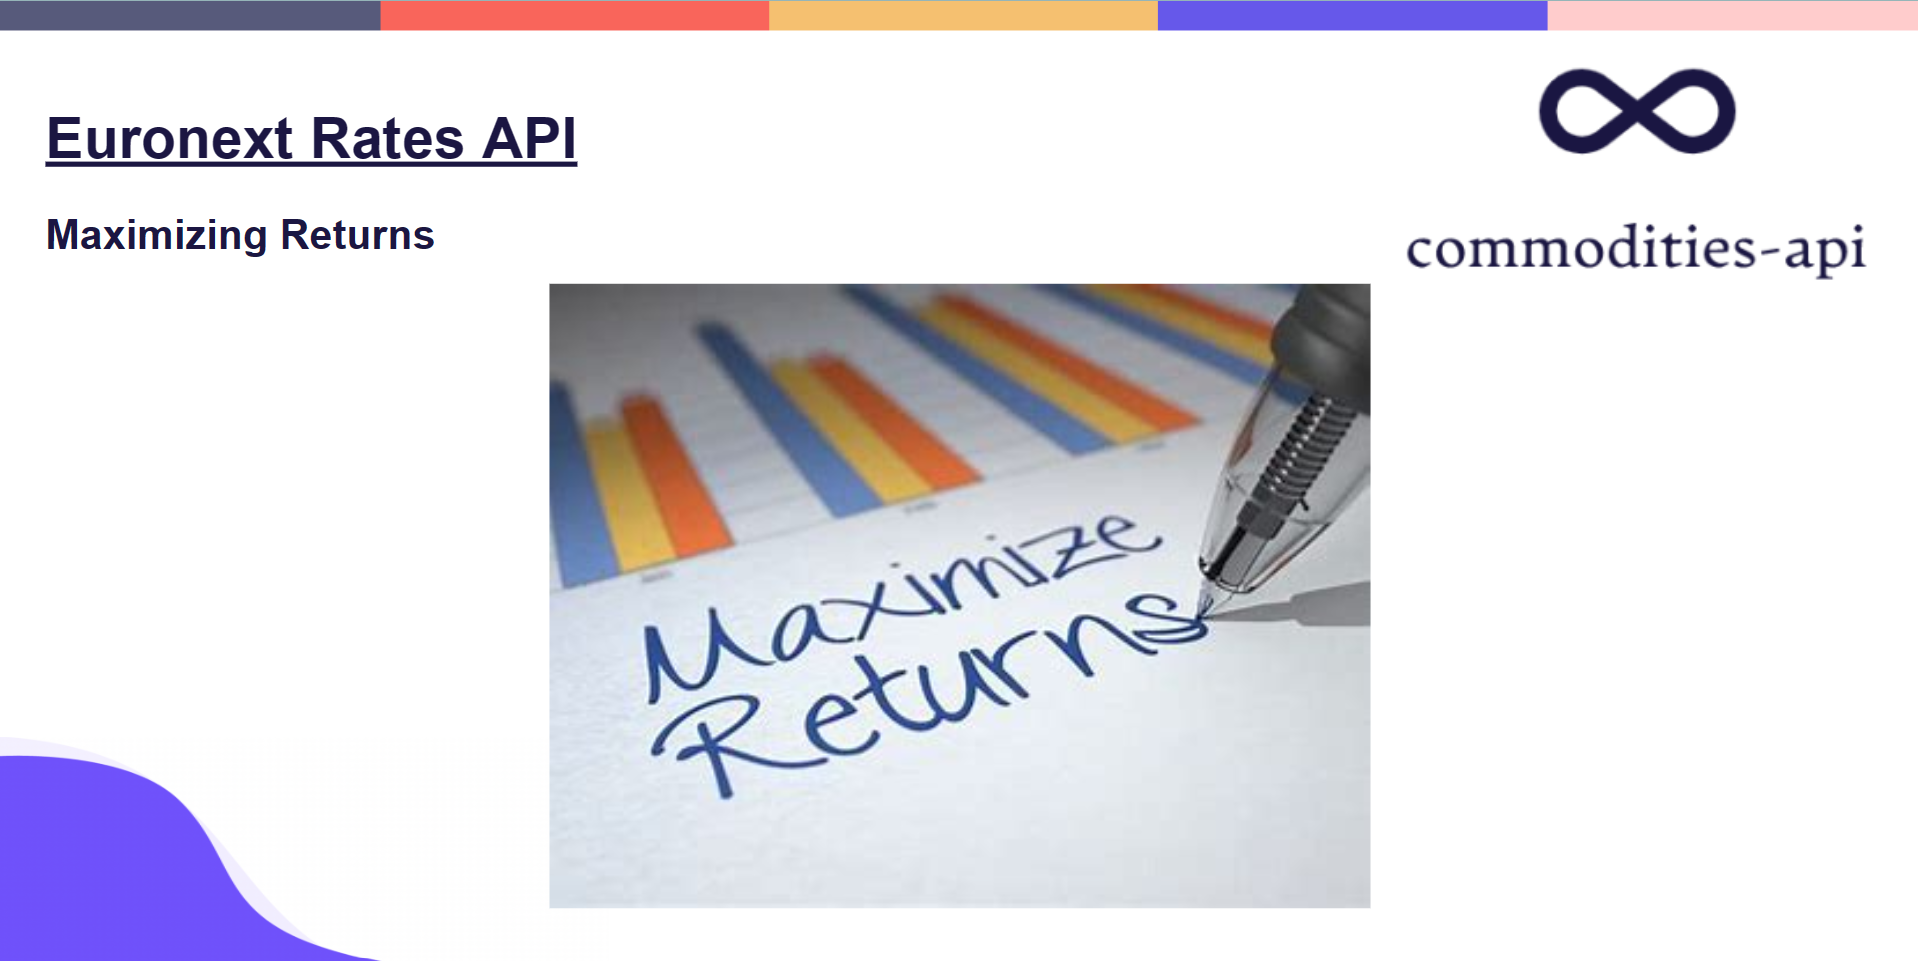 Maximizing Returns With Euronext Rates API